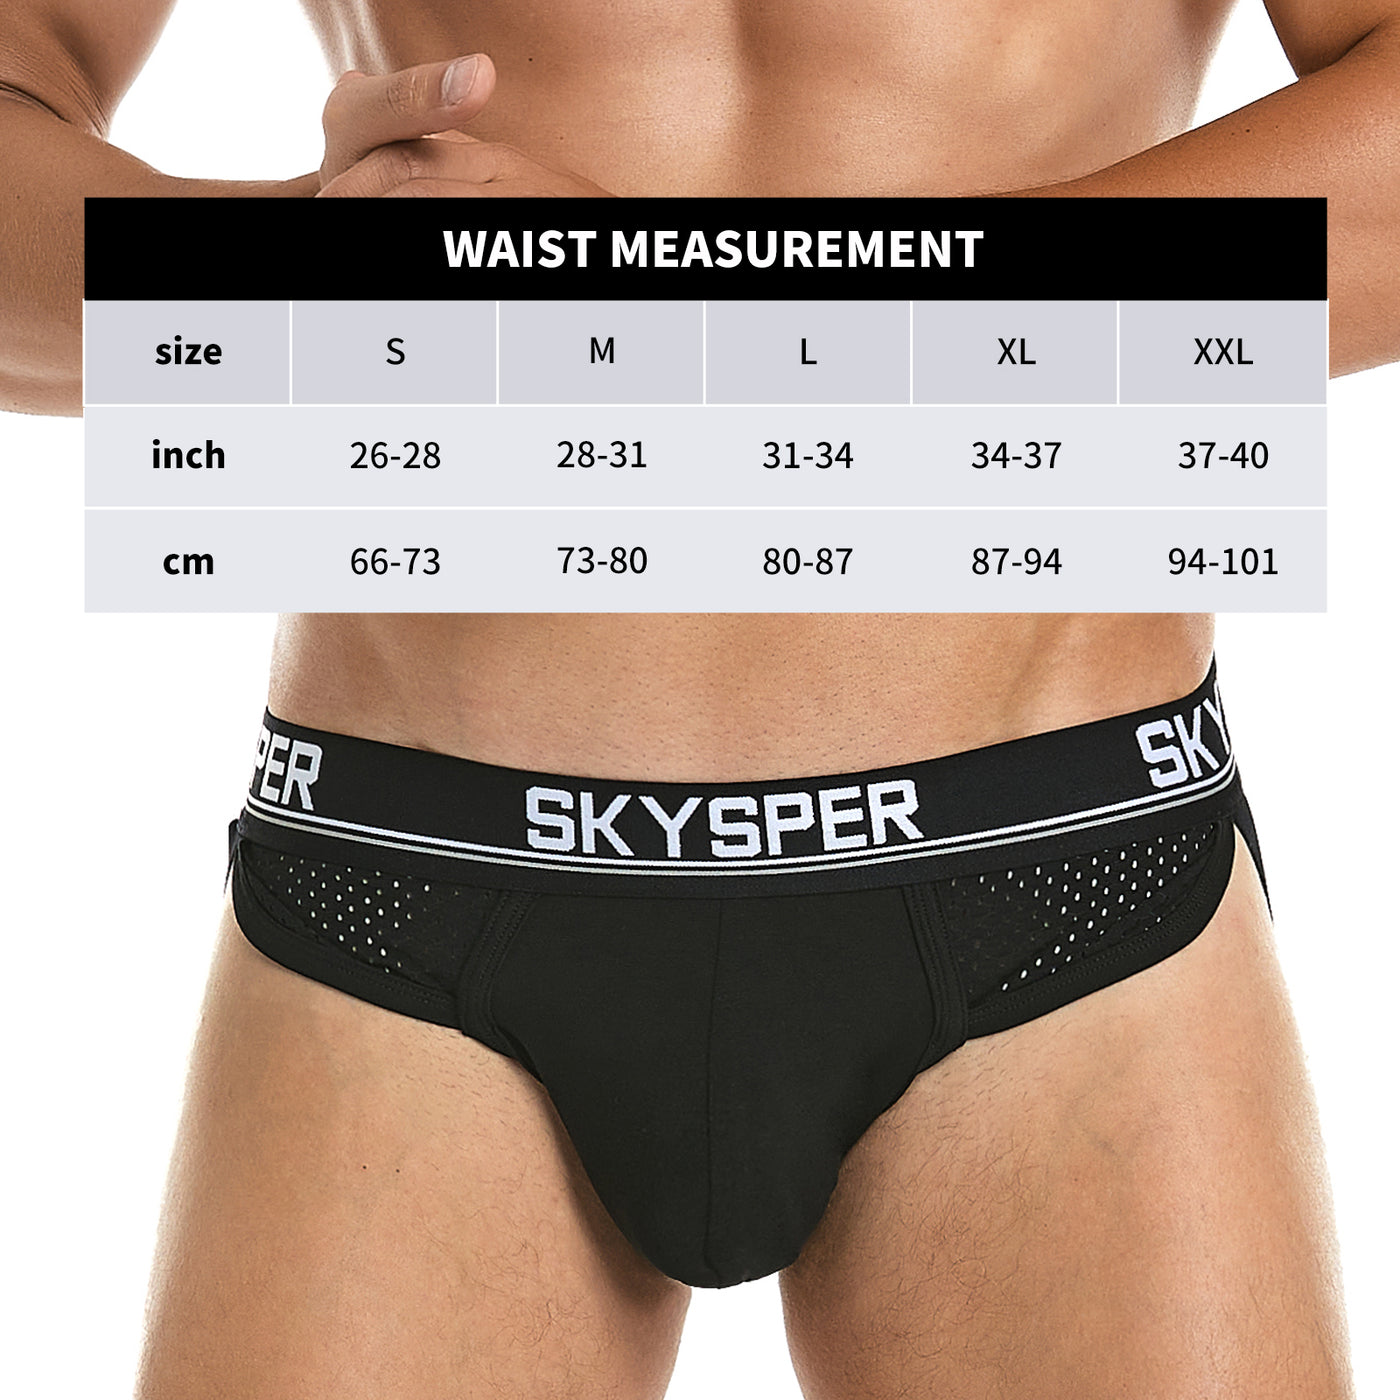 SKYSPER 26SK - Men's Cotton Jockstrap Underwear Athletic Supporter